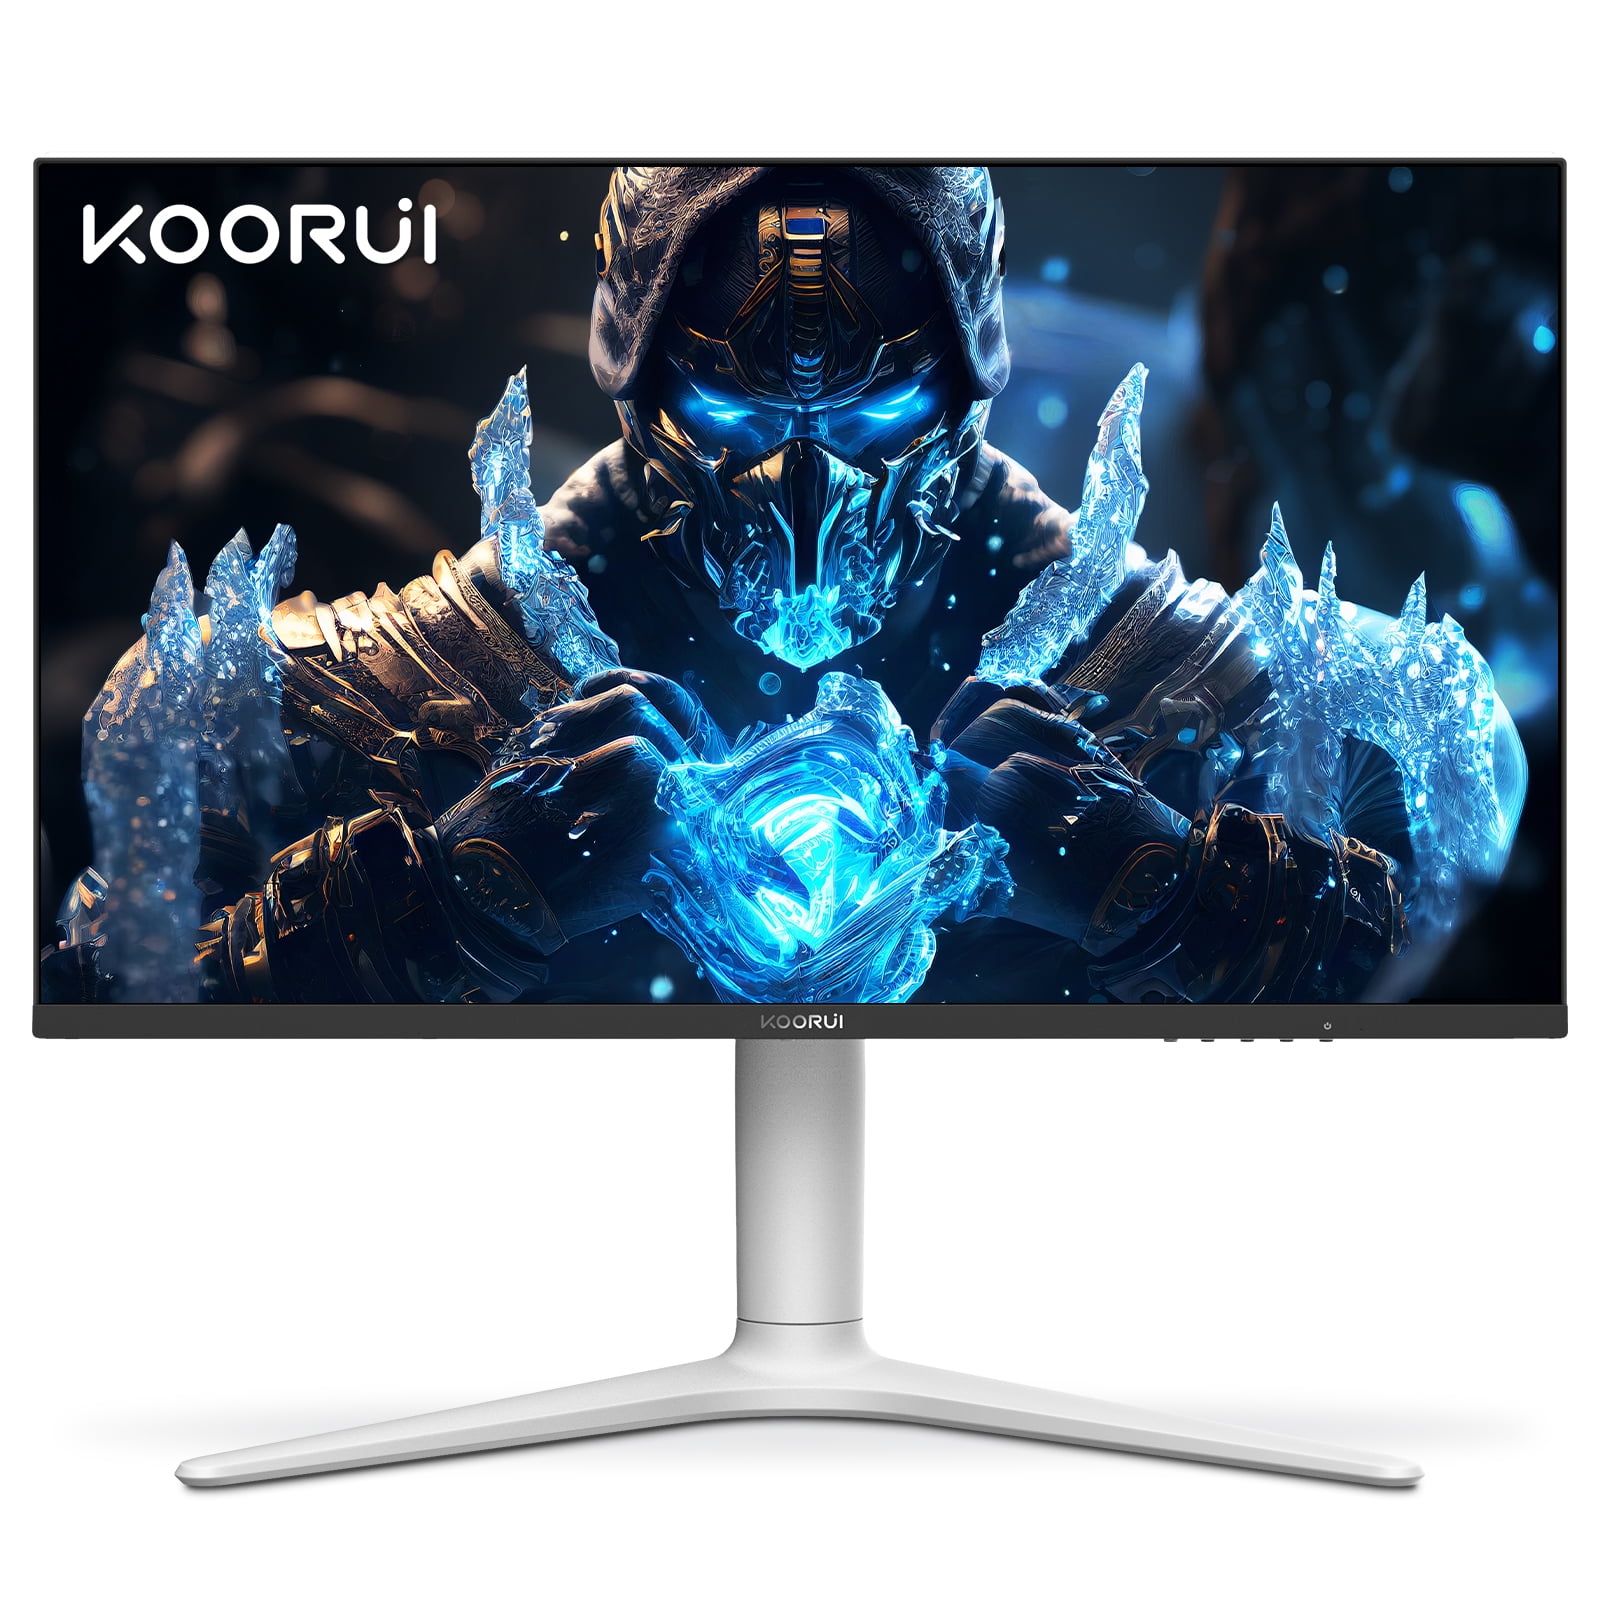 KOORUI GN10 27” Gaming Monitor, WQHD (2560 x 1440), 240HZ, Mini-LED, 95%  DCI-P3 99% Adobe RGB 100% sRGB, Display HDR 1000, Tilt Pivot Swivel Height  Adjustable, HDMI, DisplayPort, White/Grey 